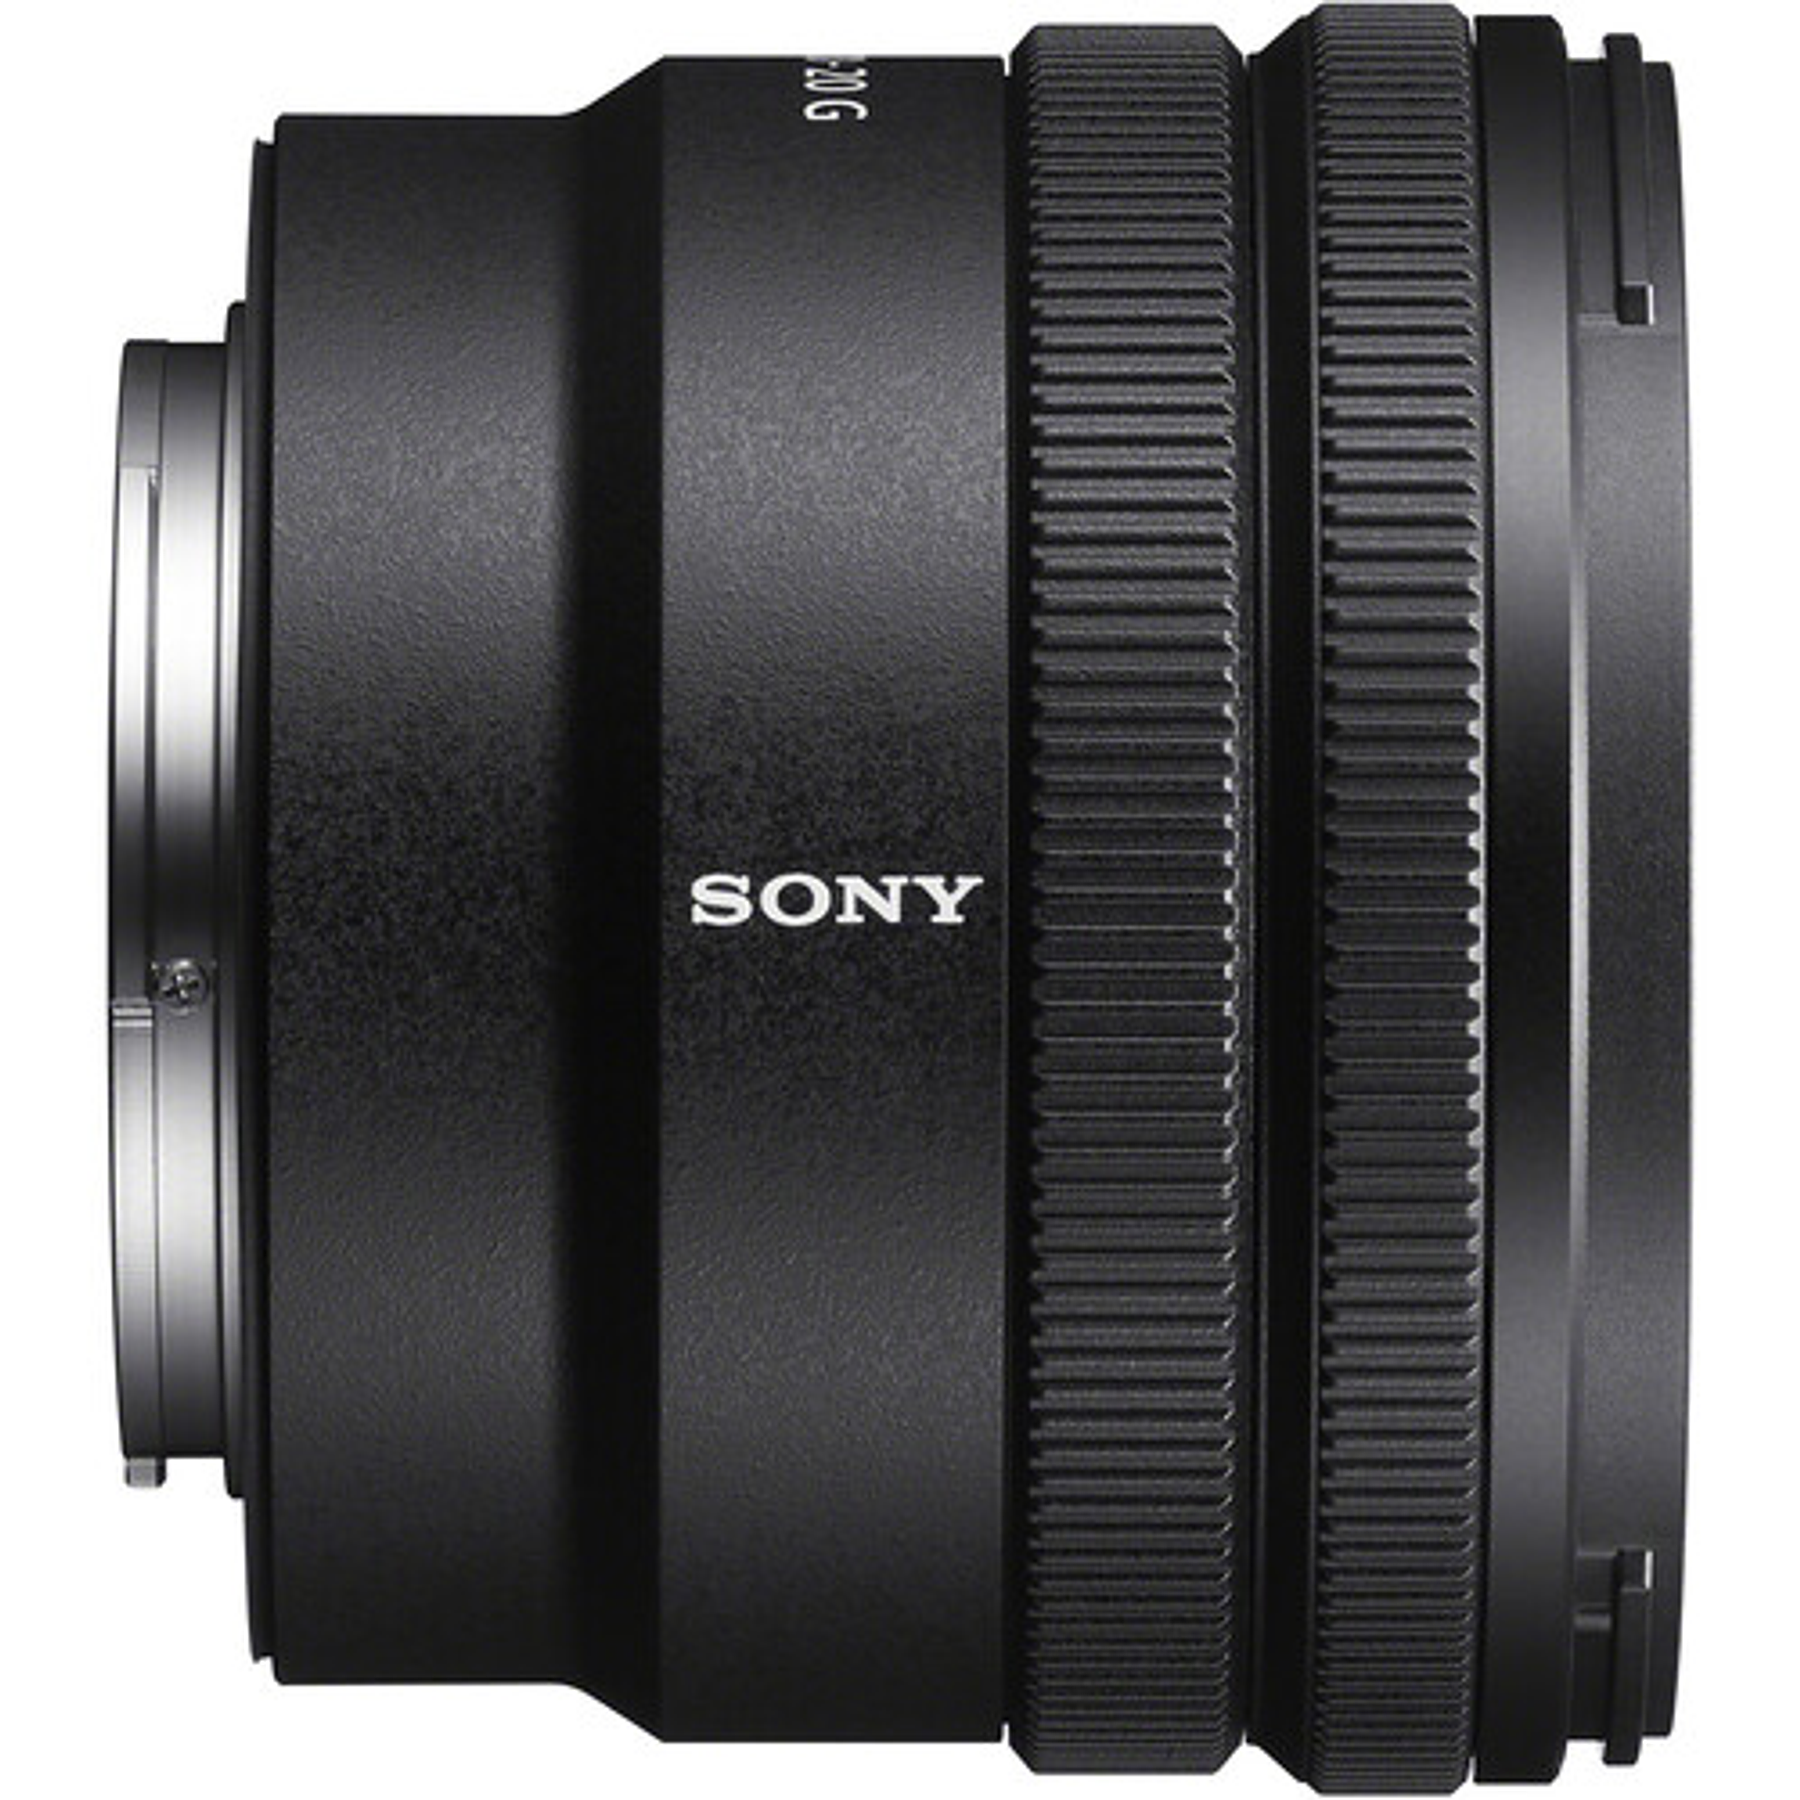 Sony E 10-20mm f/4 PZ G